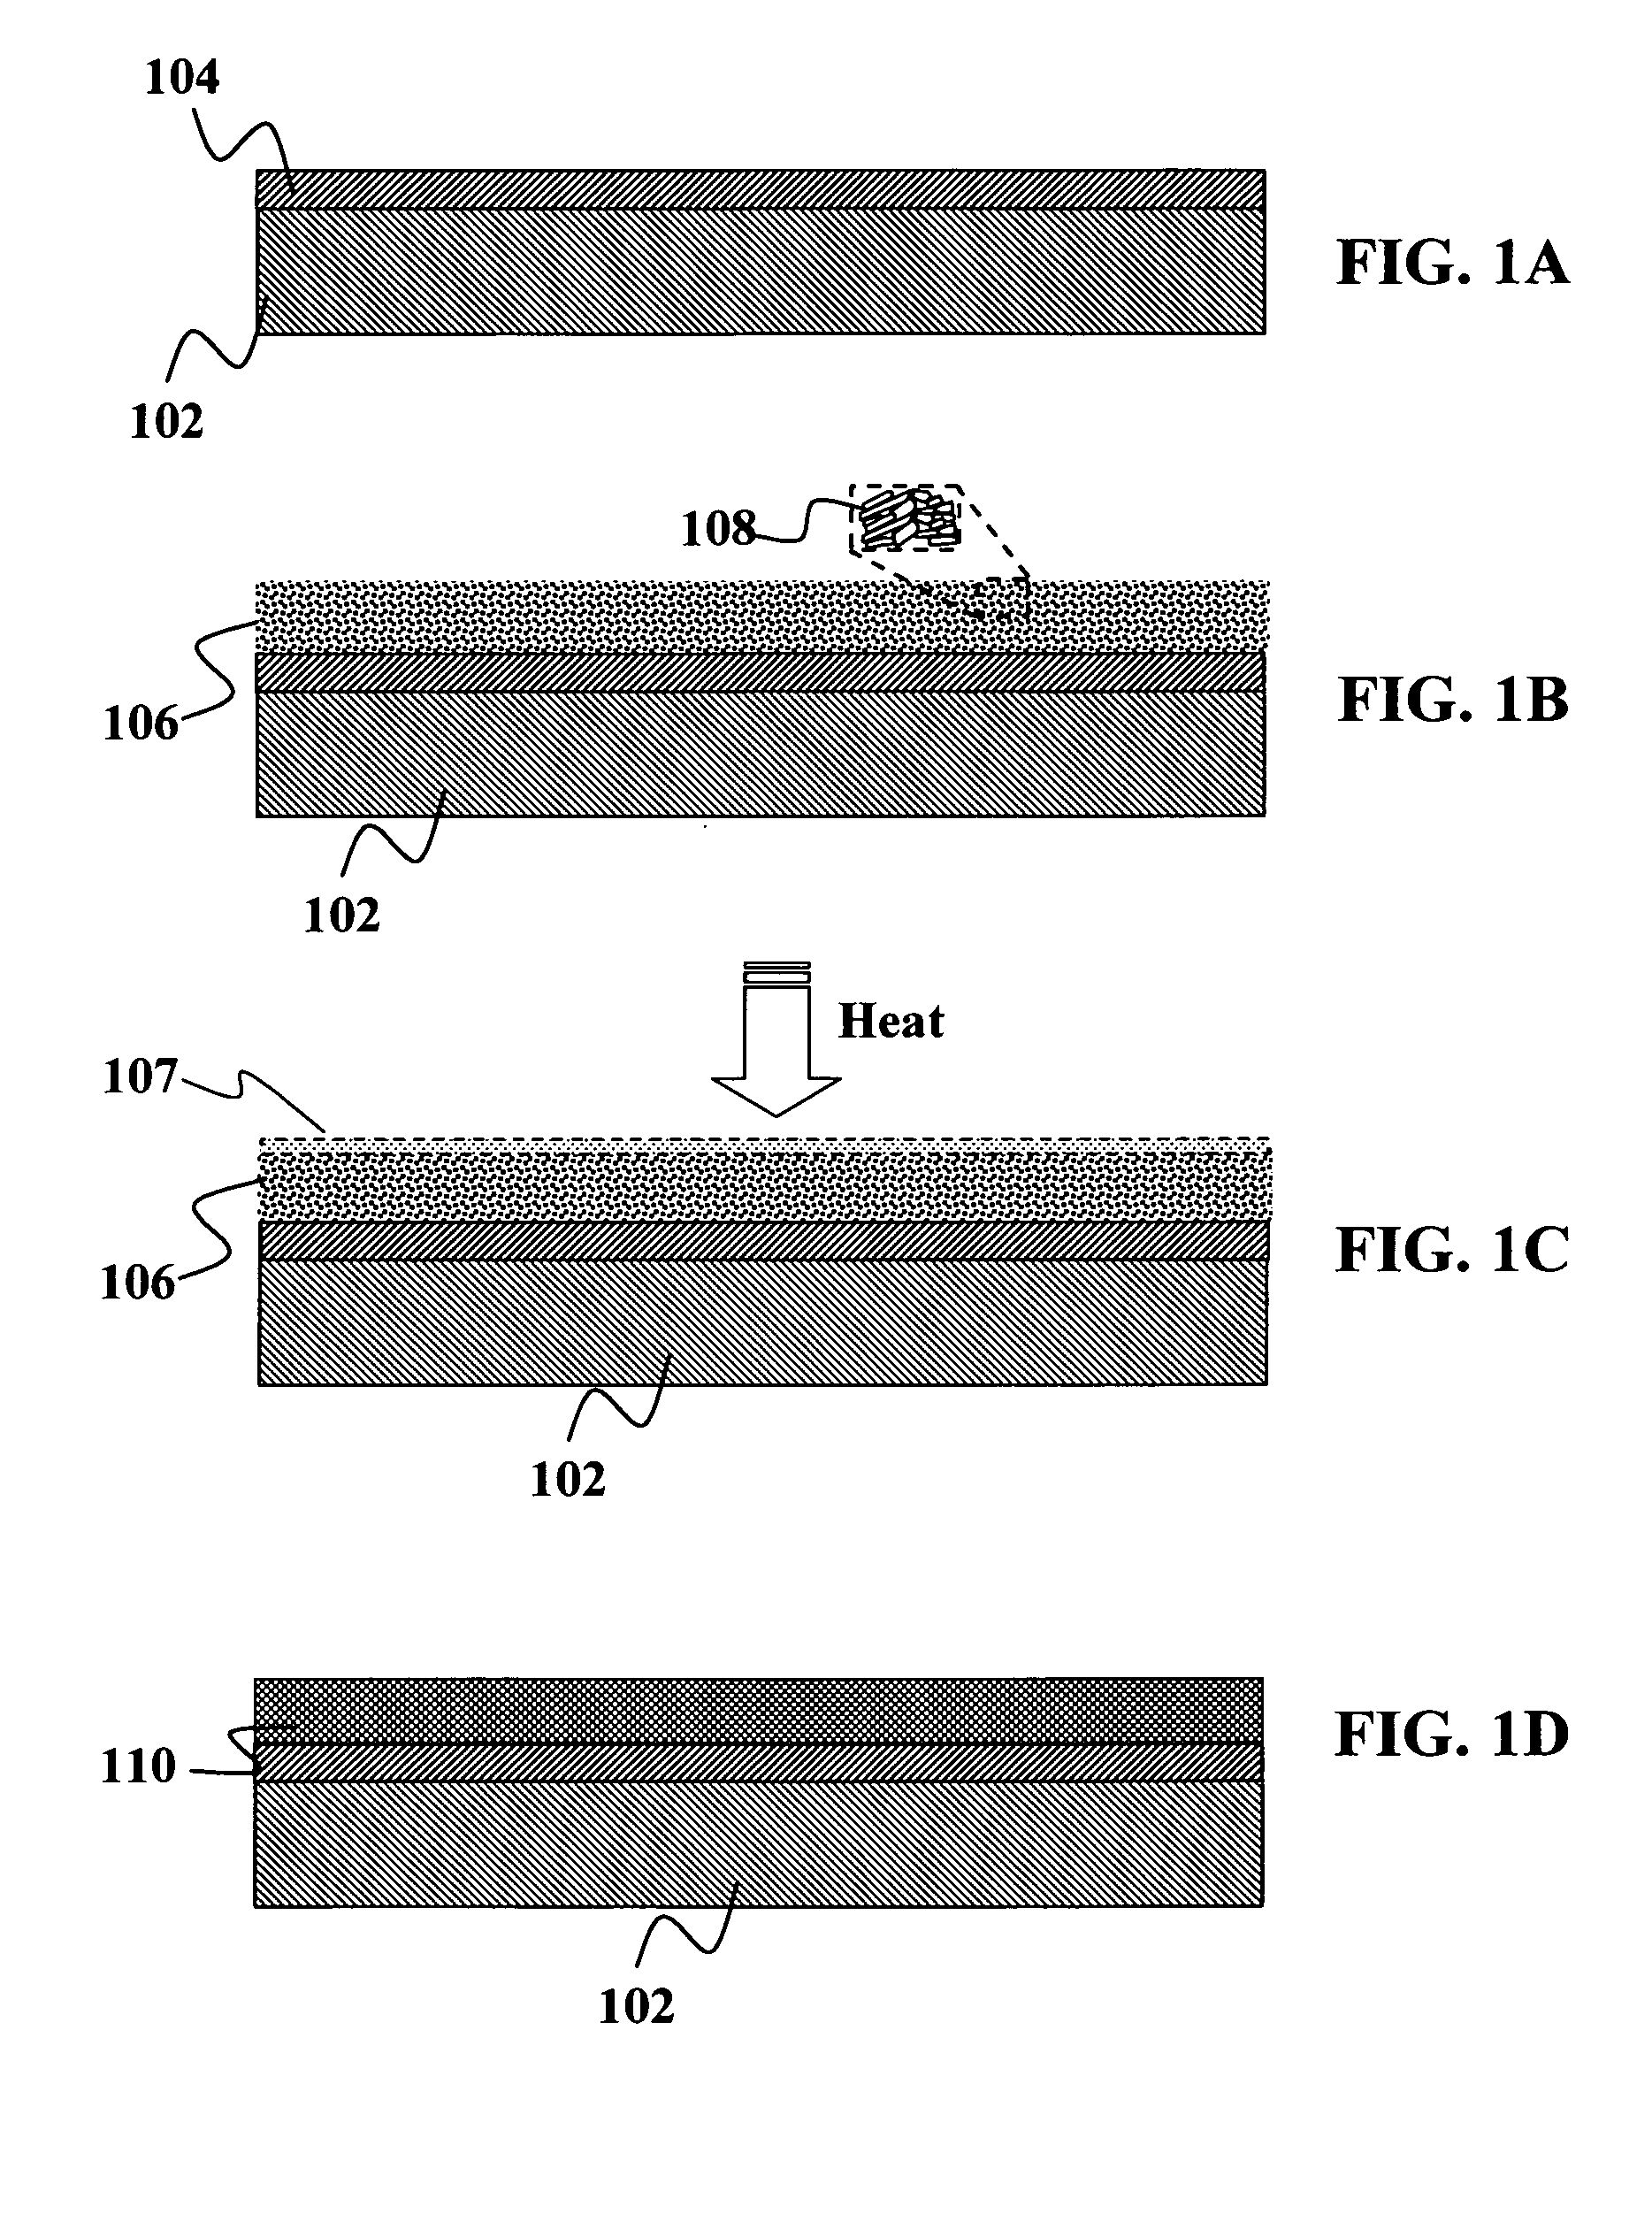 High-throughput printing of semiconductor precursor layer from inter-metallic nanoflake particles